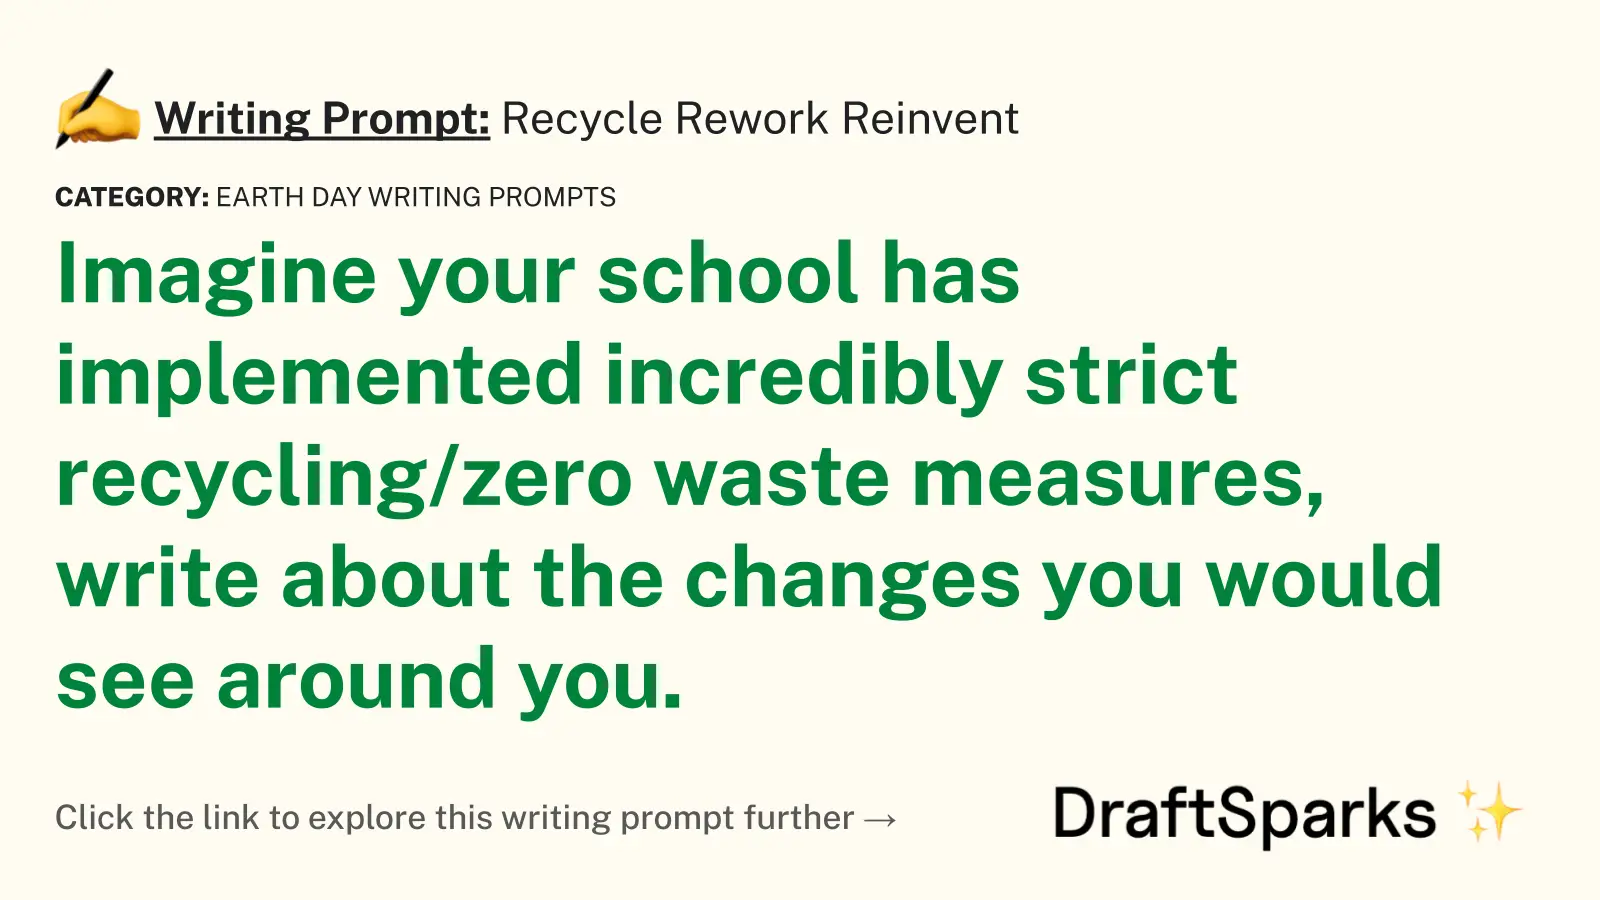 Recycle Rework Reinvent